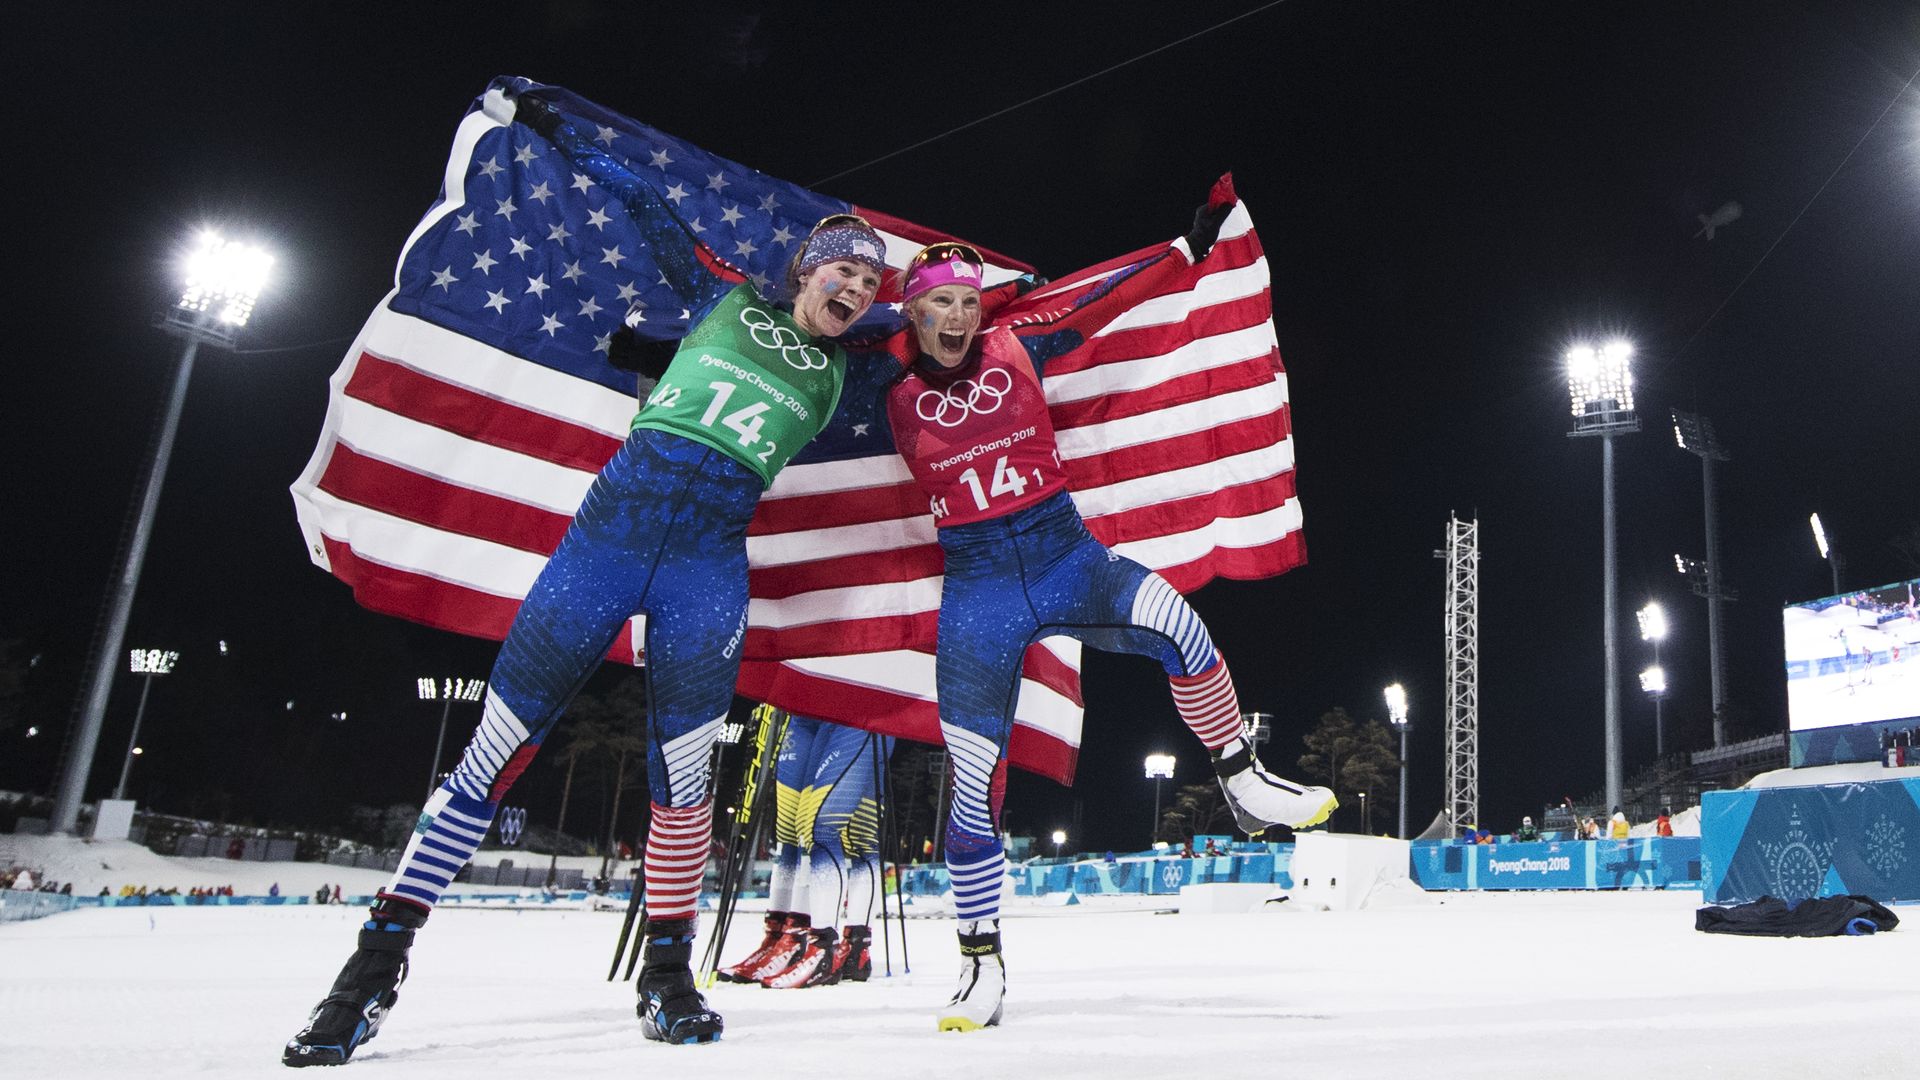 Kikkan Randall and Jessica Diggins at the Olympics.